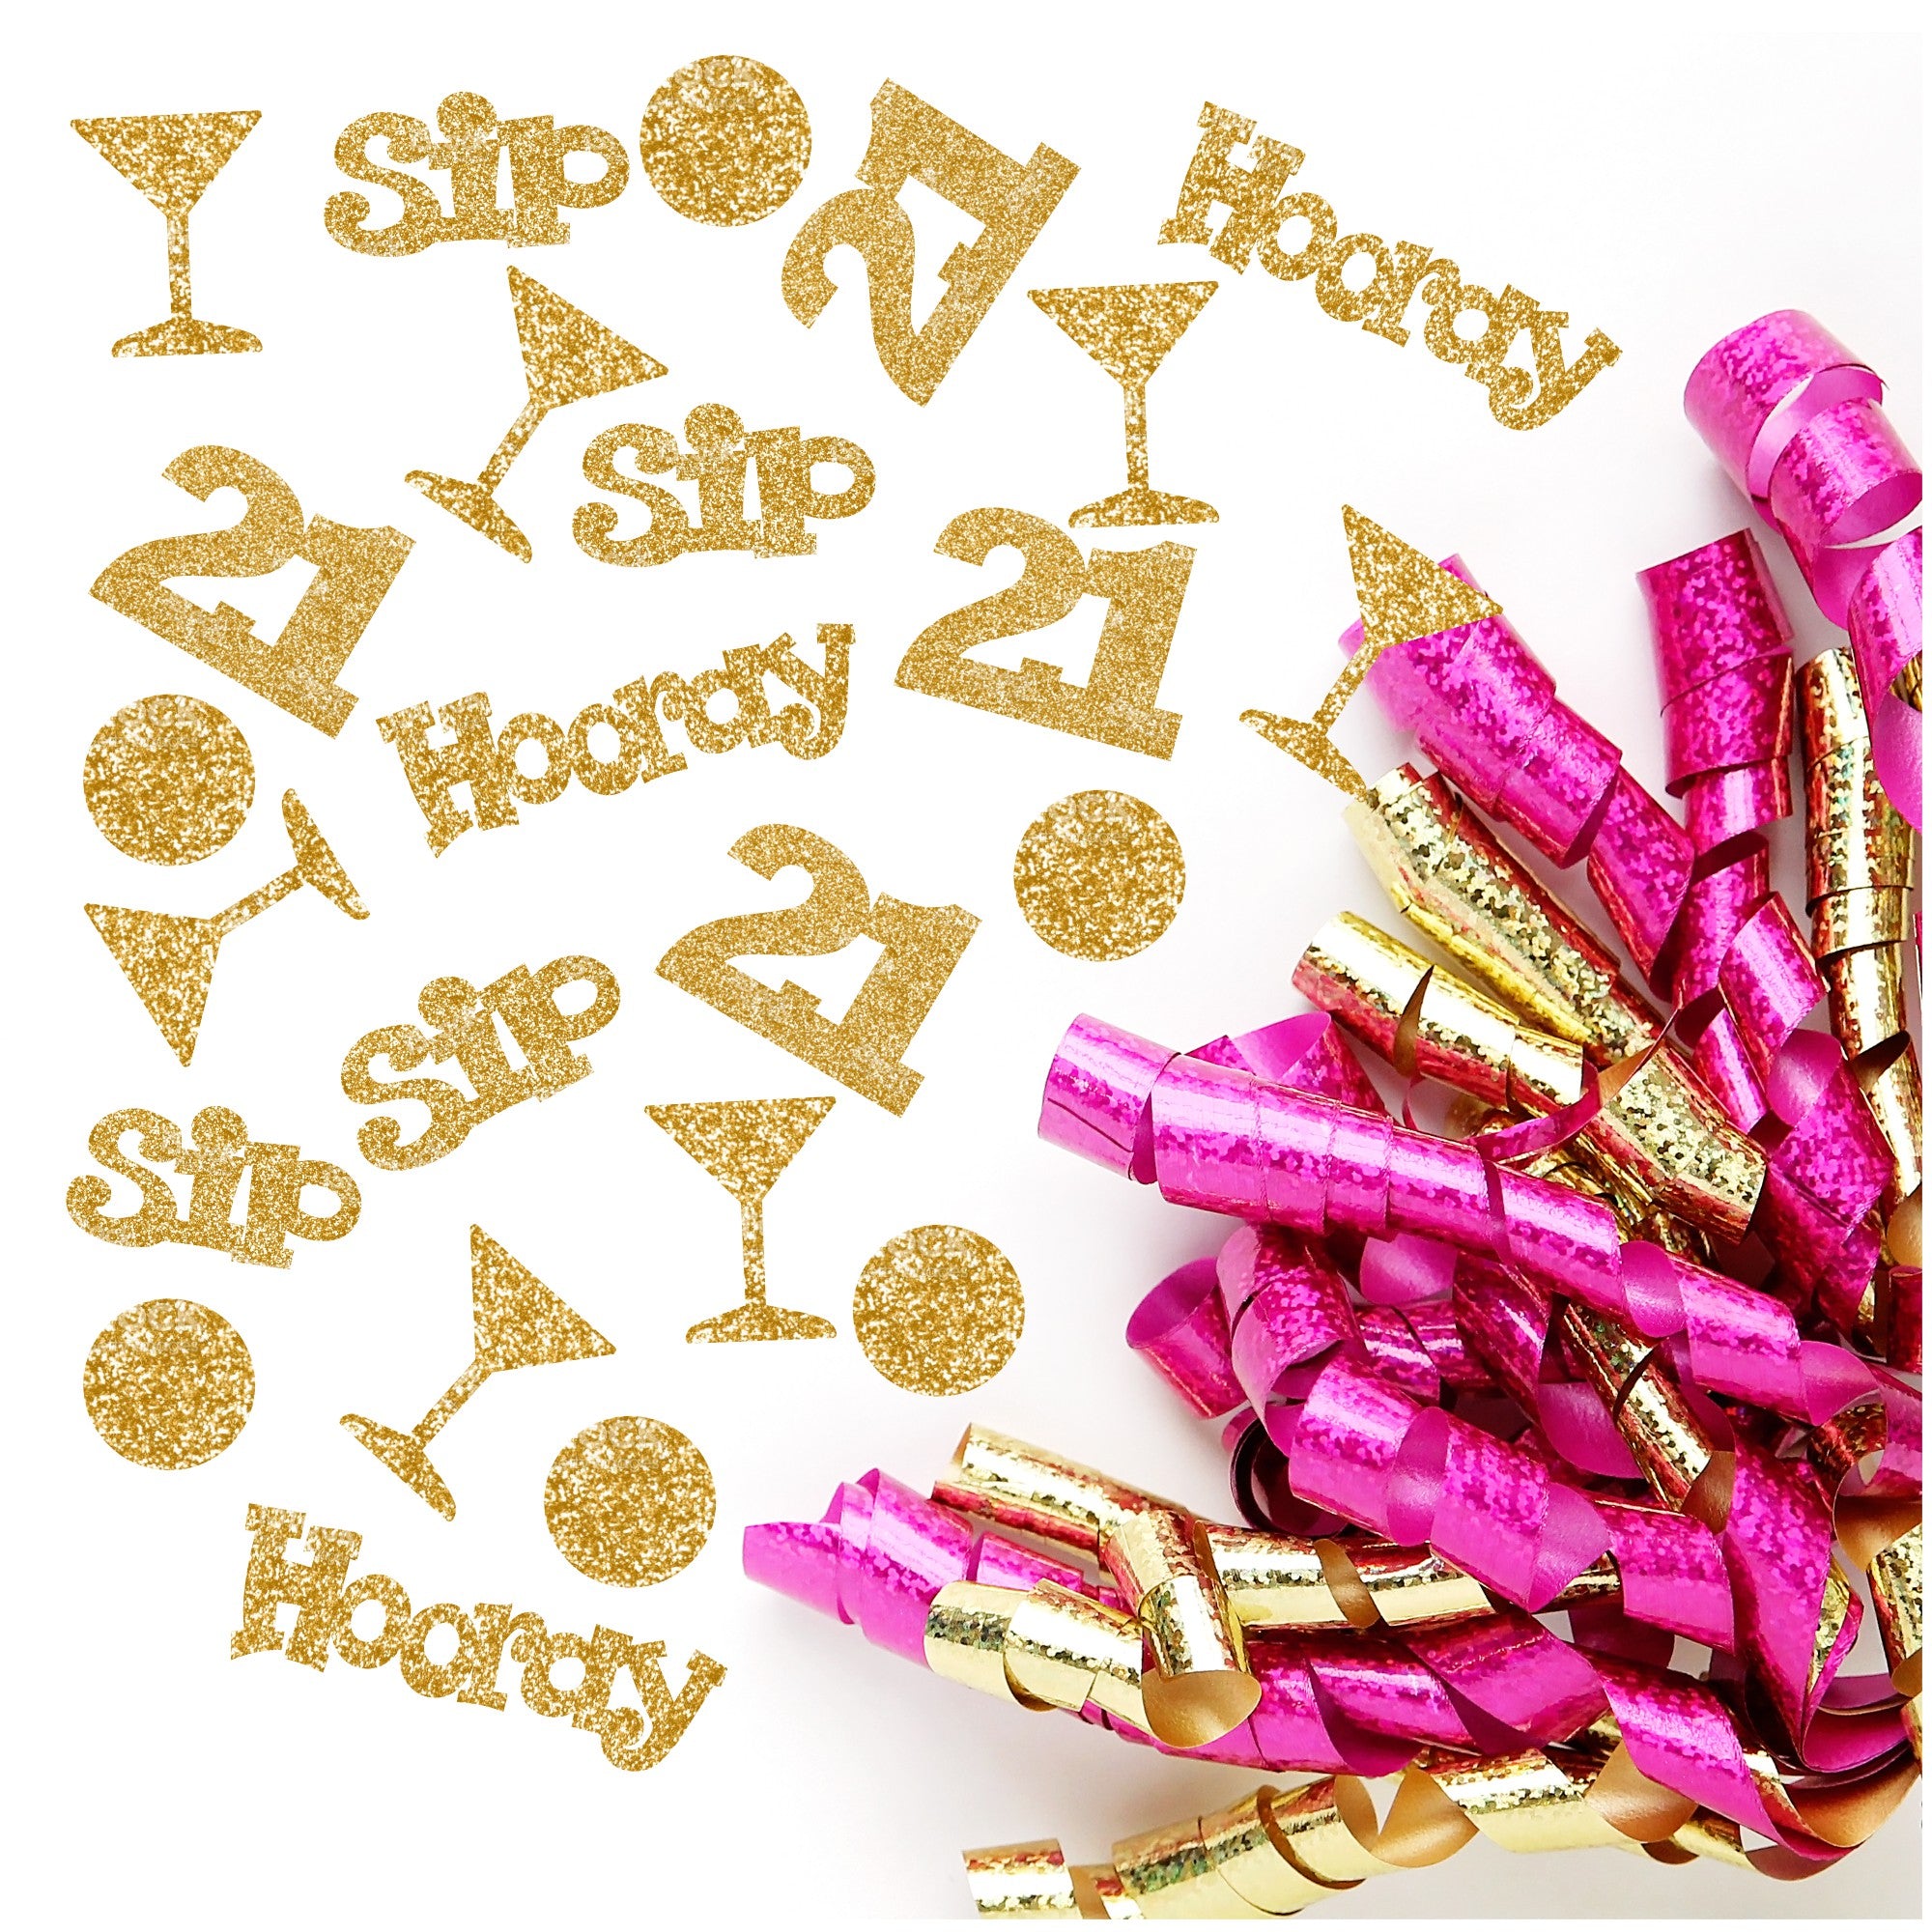 Gold 21st Birthday Decorations - Sip Sip Hooray - 21st Party Decorations - 21st Birthday Party Supplies - Table Confetti for Birthday